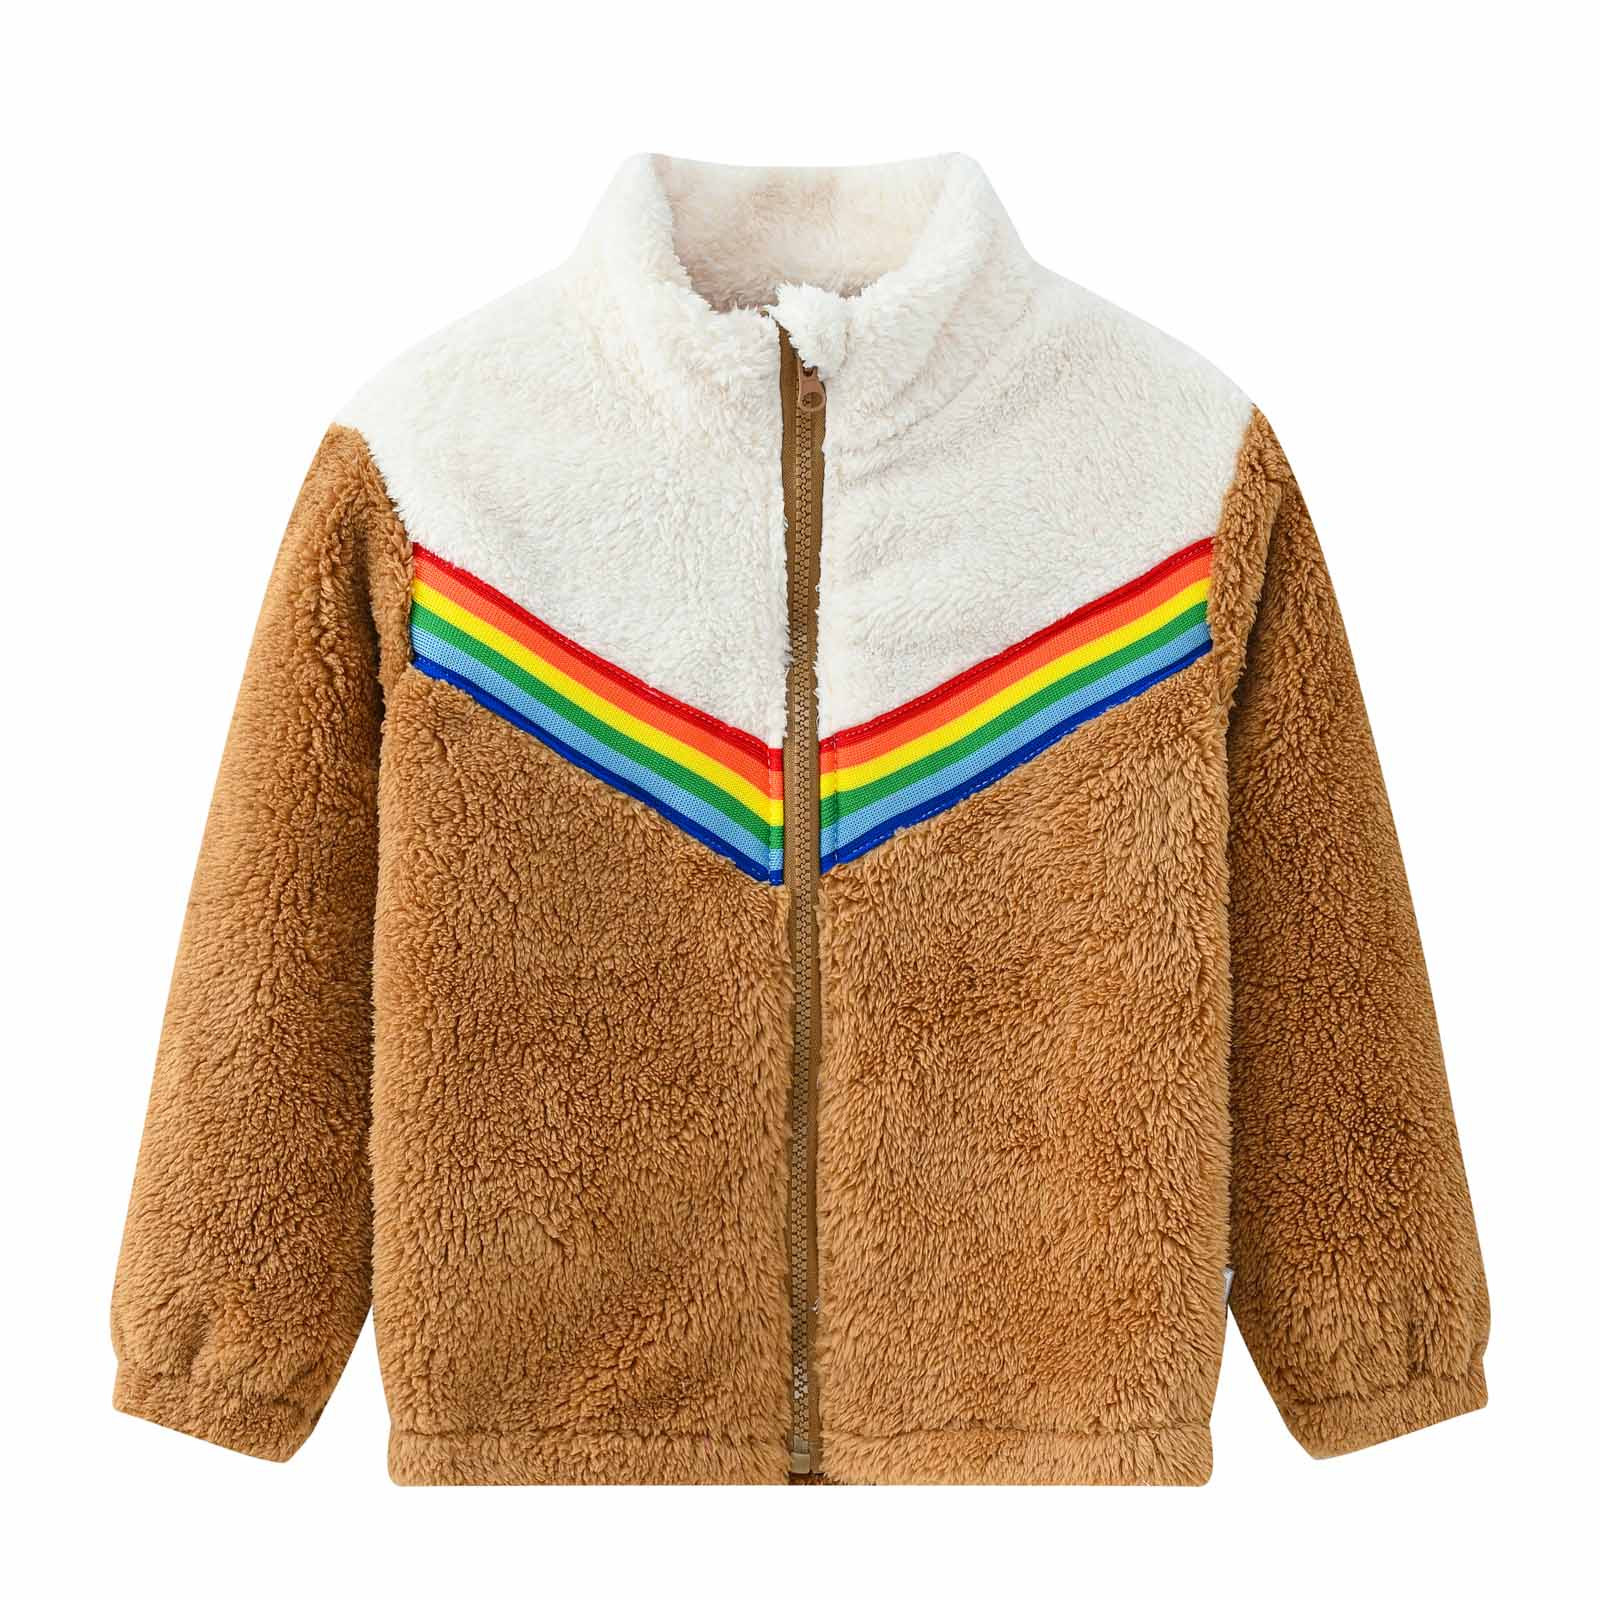 YYDGH Girls Zipper Jacket Fuzzy Sweatshirt Long Sleeve Casual Cozy Fleece Sherpa Outwear Coat Full-Zip Rainbow Jackets(Khaki,4-5 Years) - image 1 of 8